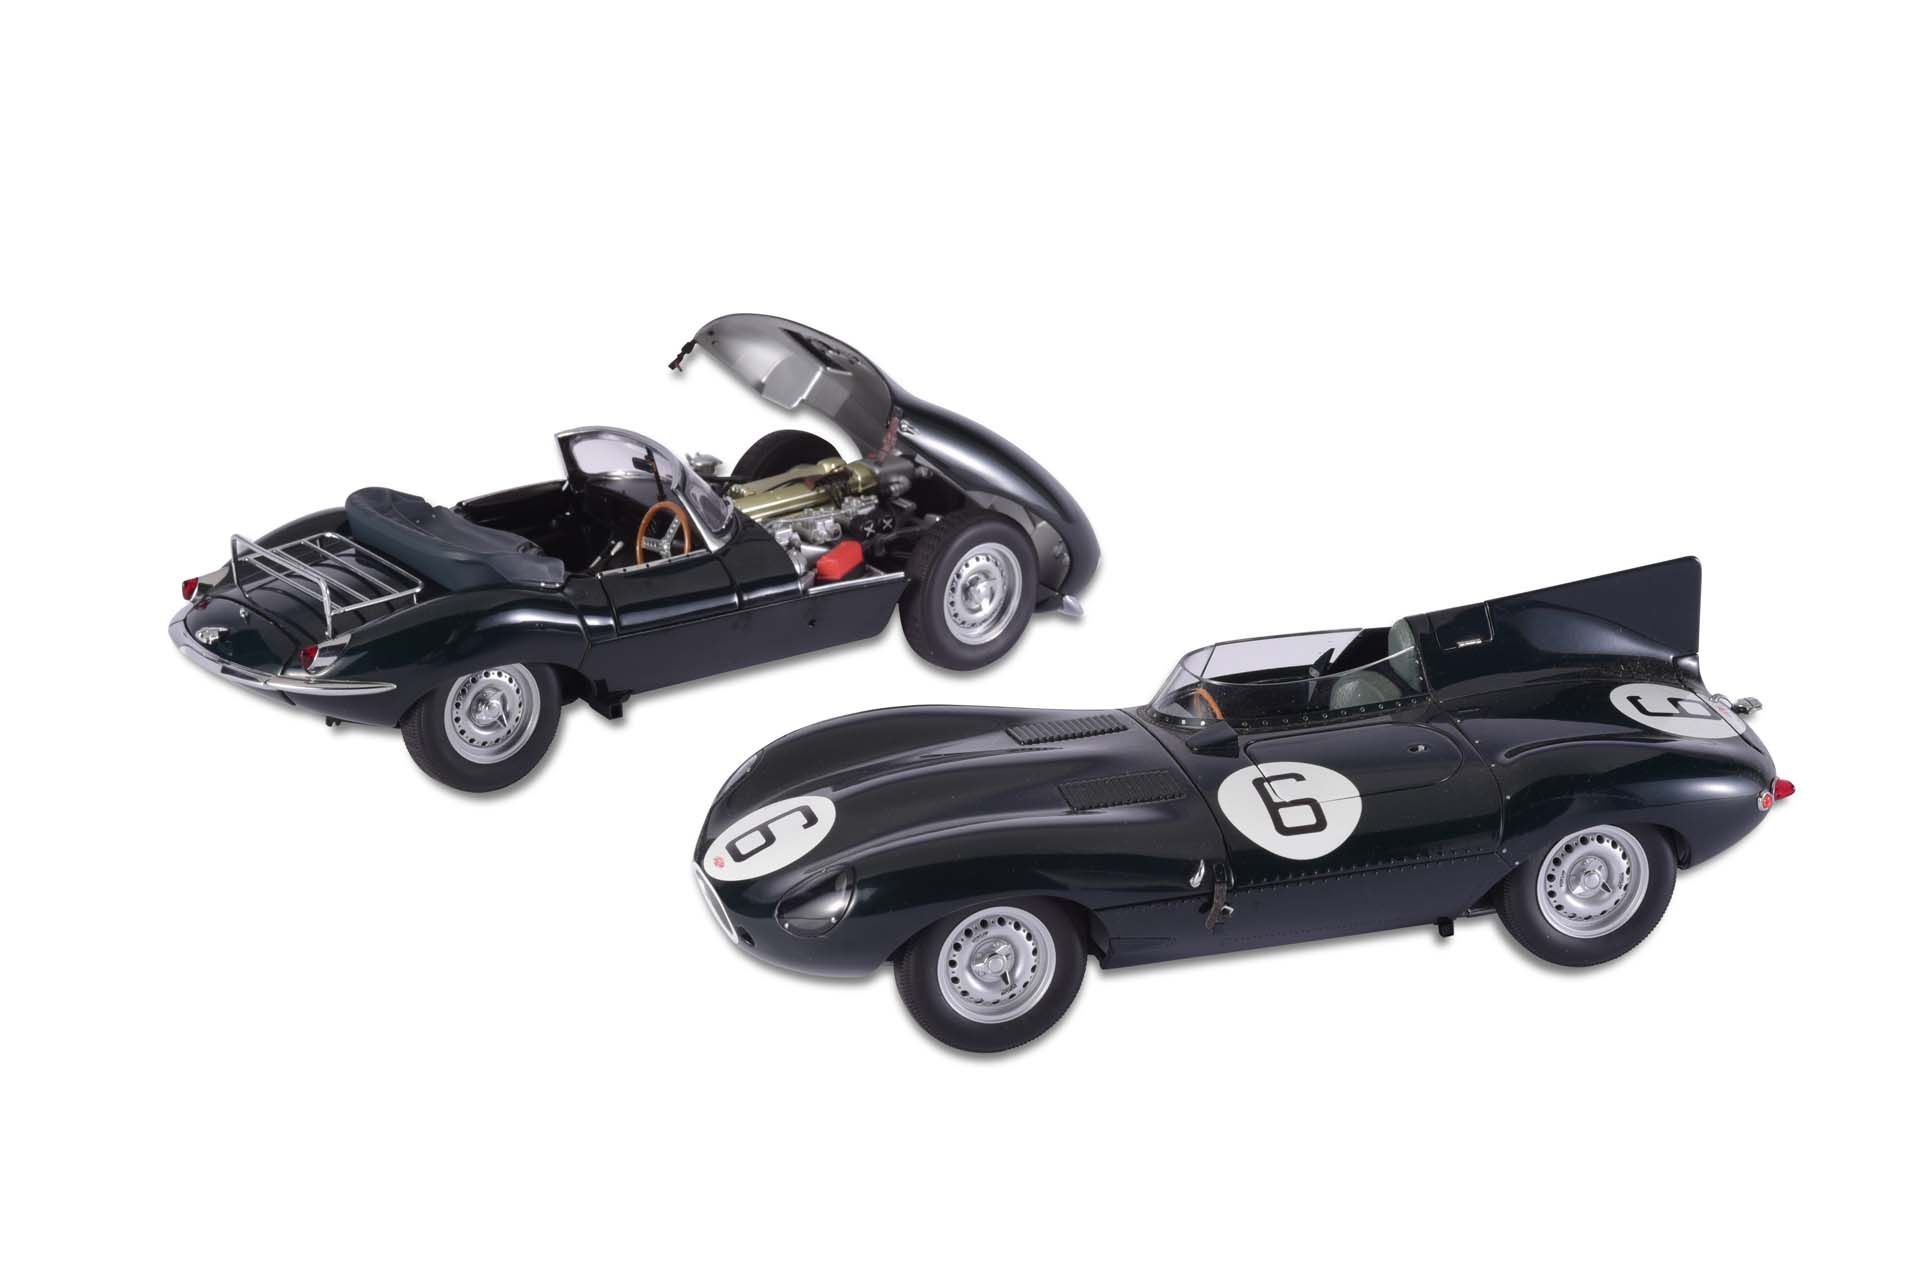 Broad Arrow Auctions | Pair of Jaguars including Jaguar XK-SS and Jaguar D-Type with serial no. 383